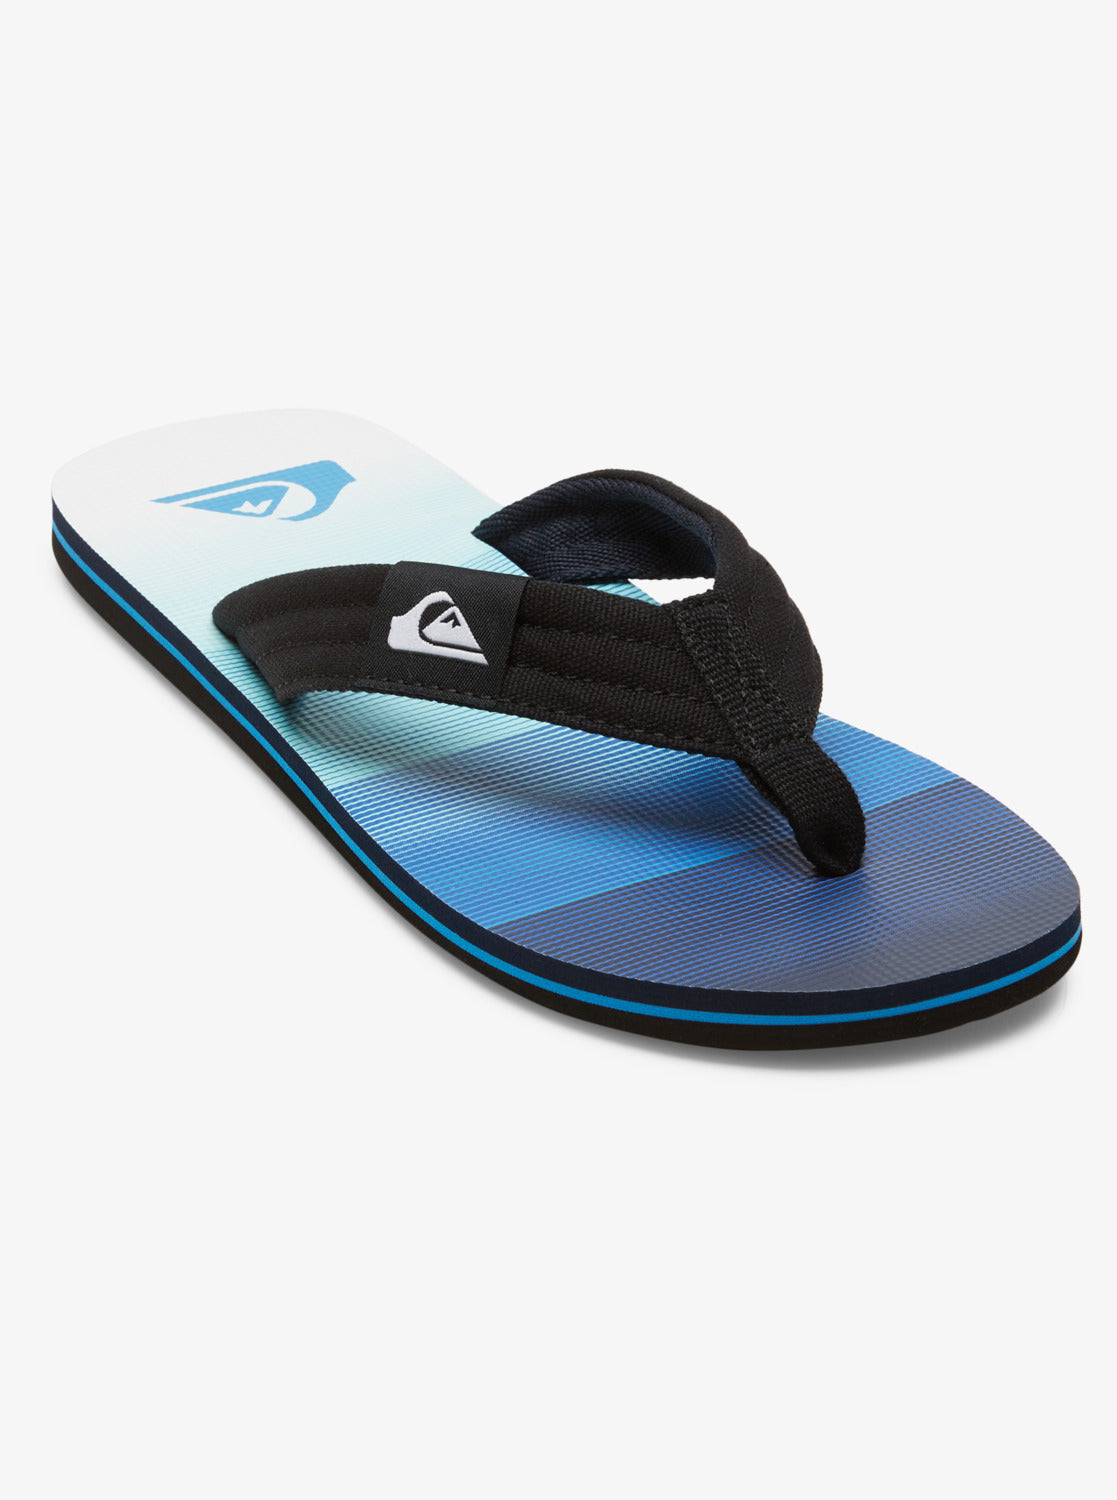 Quiksilver Molokai Layback - Sandals for Men in Blue